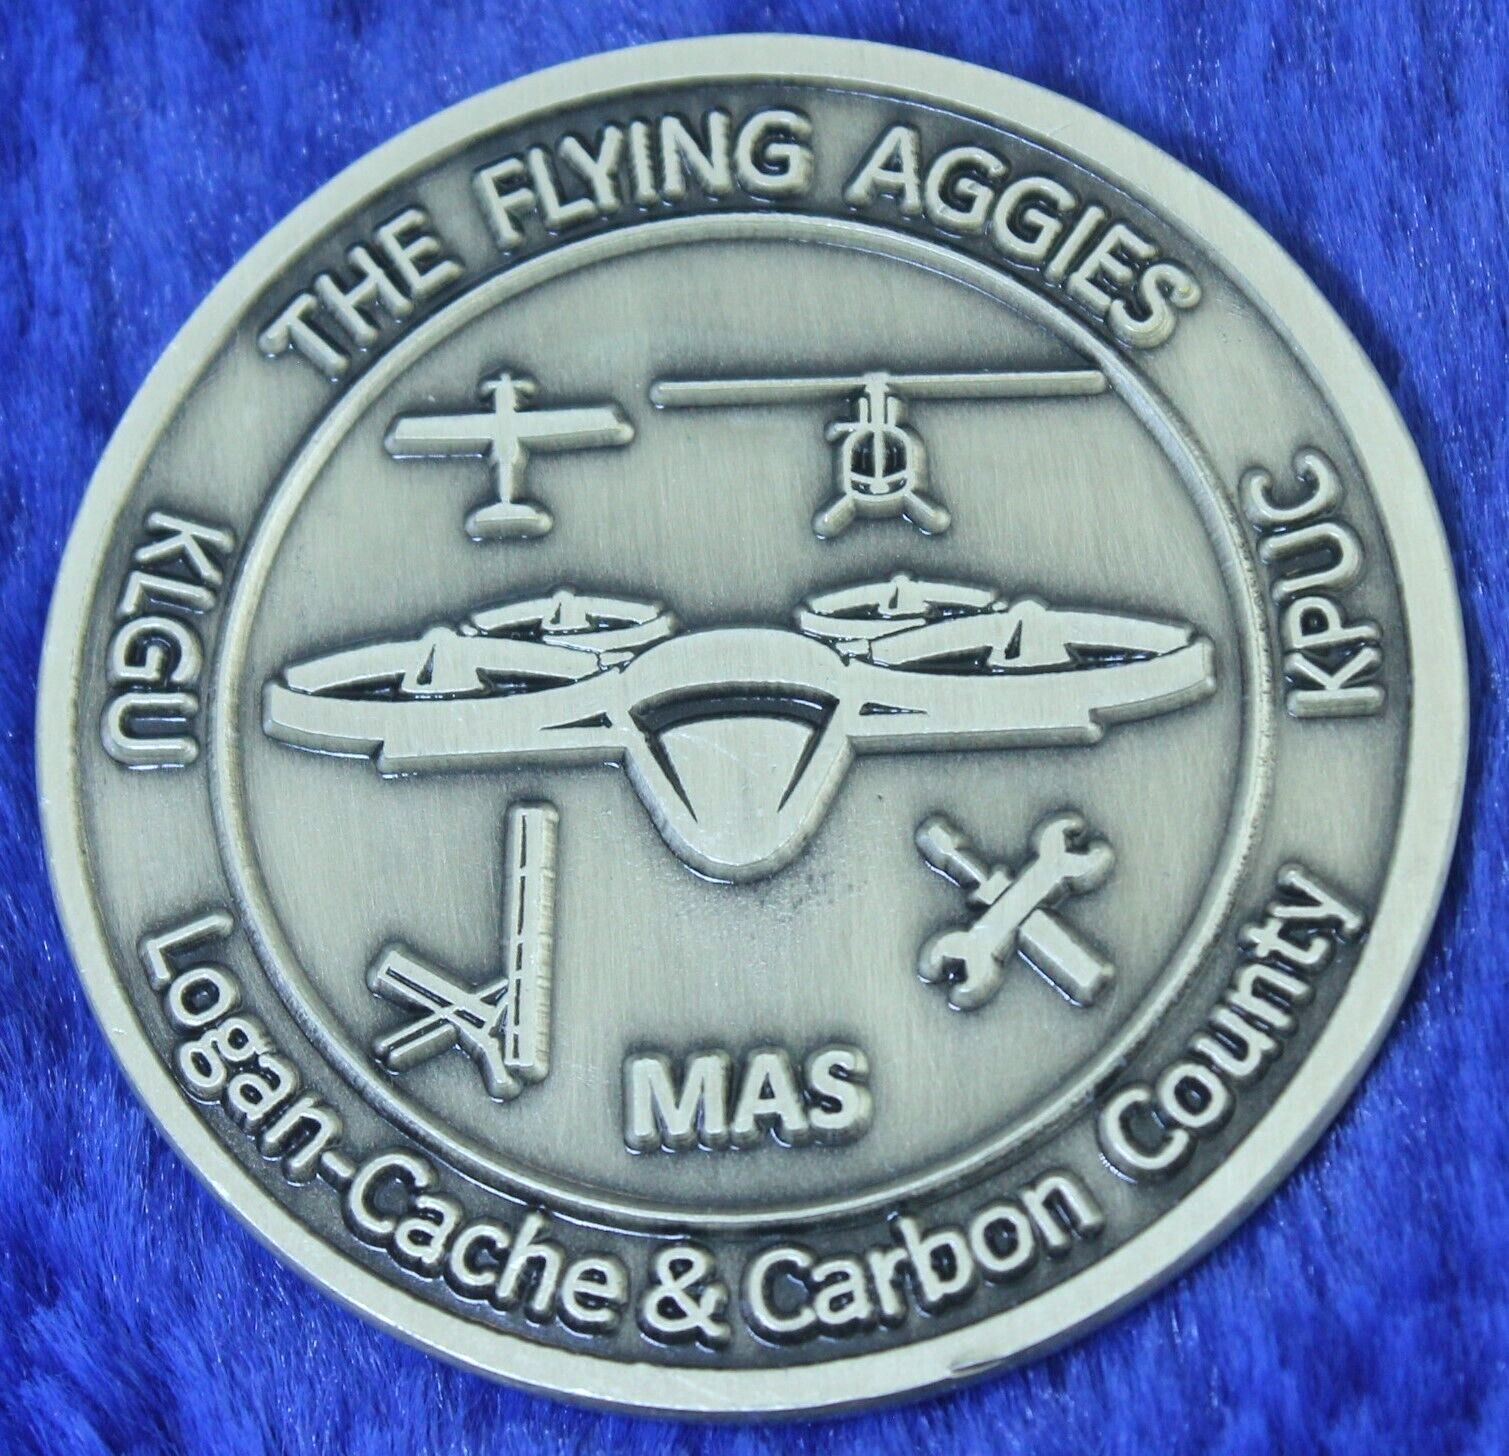 Utah State University Aviation Technology Logan-Cache&Carbon Challenge Coin OC-5